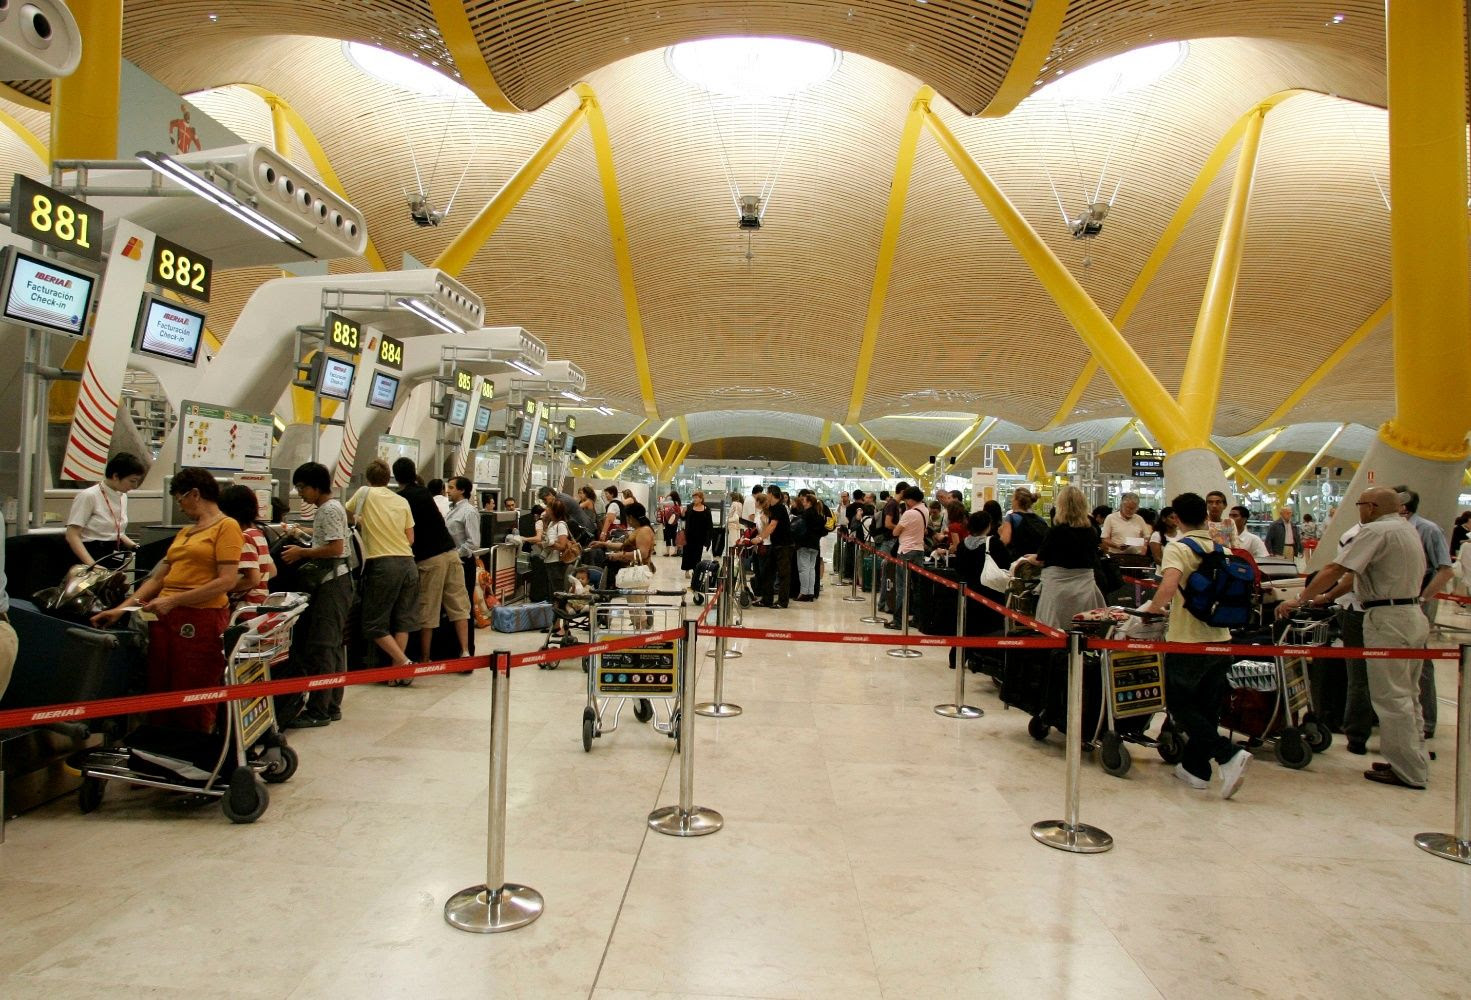 Aeropuerto Adolfo Suárez-Madrid Barajas